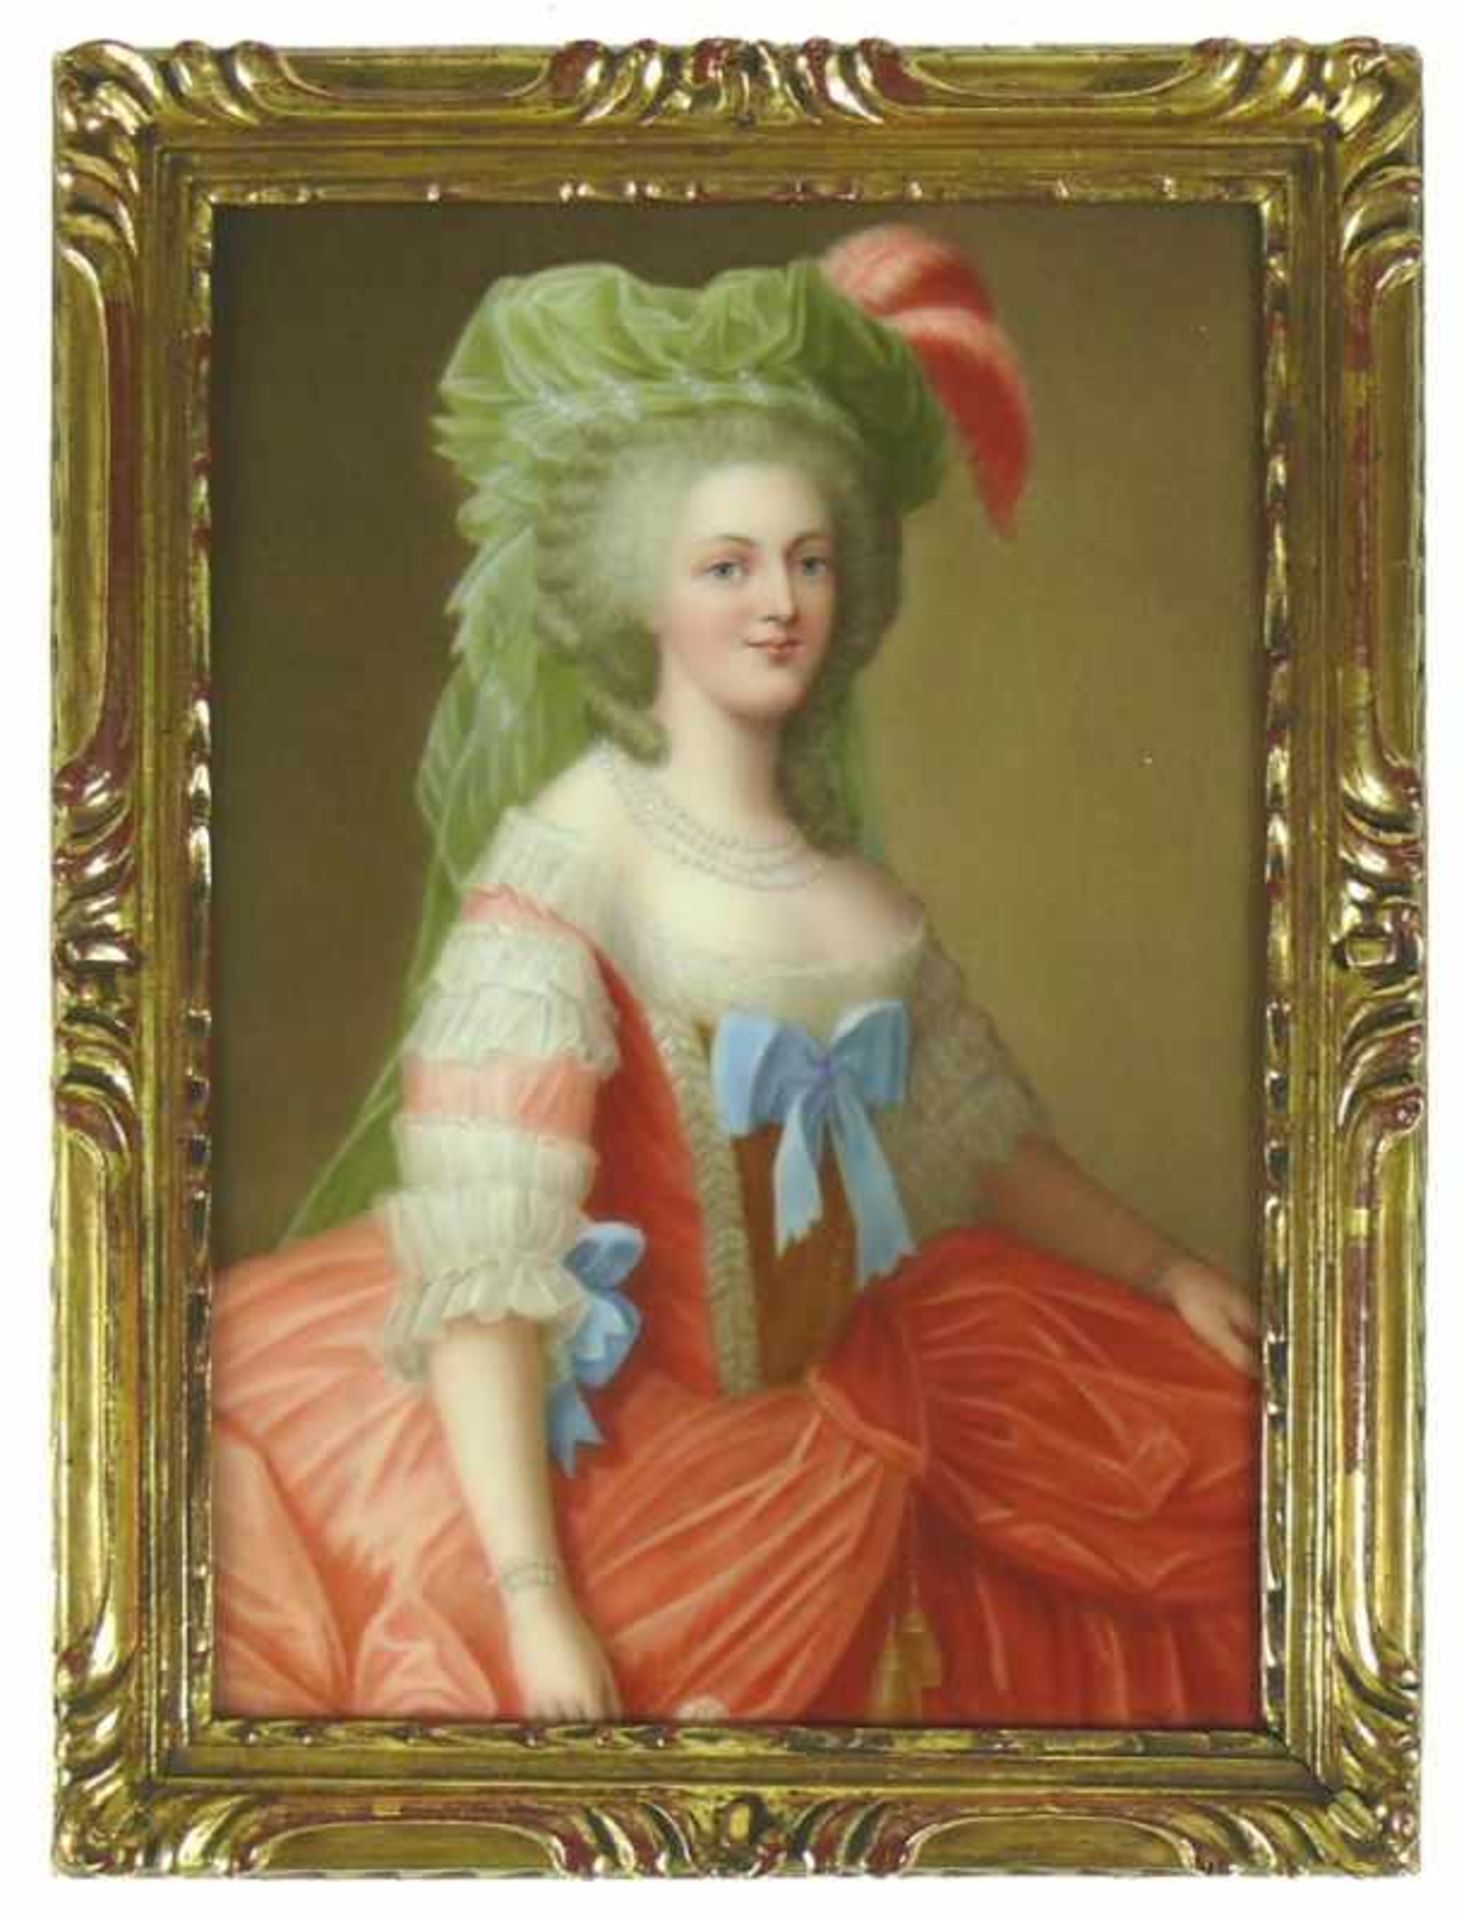 Bildplatte (Ende 19.Jh.) "Darstellung Marie Antoinette" in prächtigem Kleid mit Kopfschmuck; bemalte